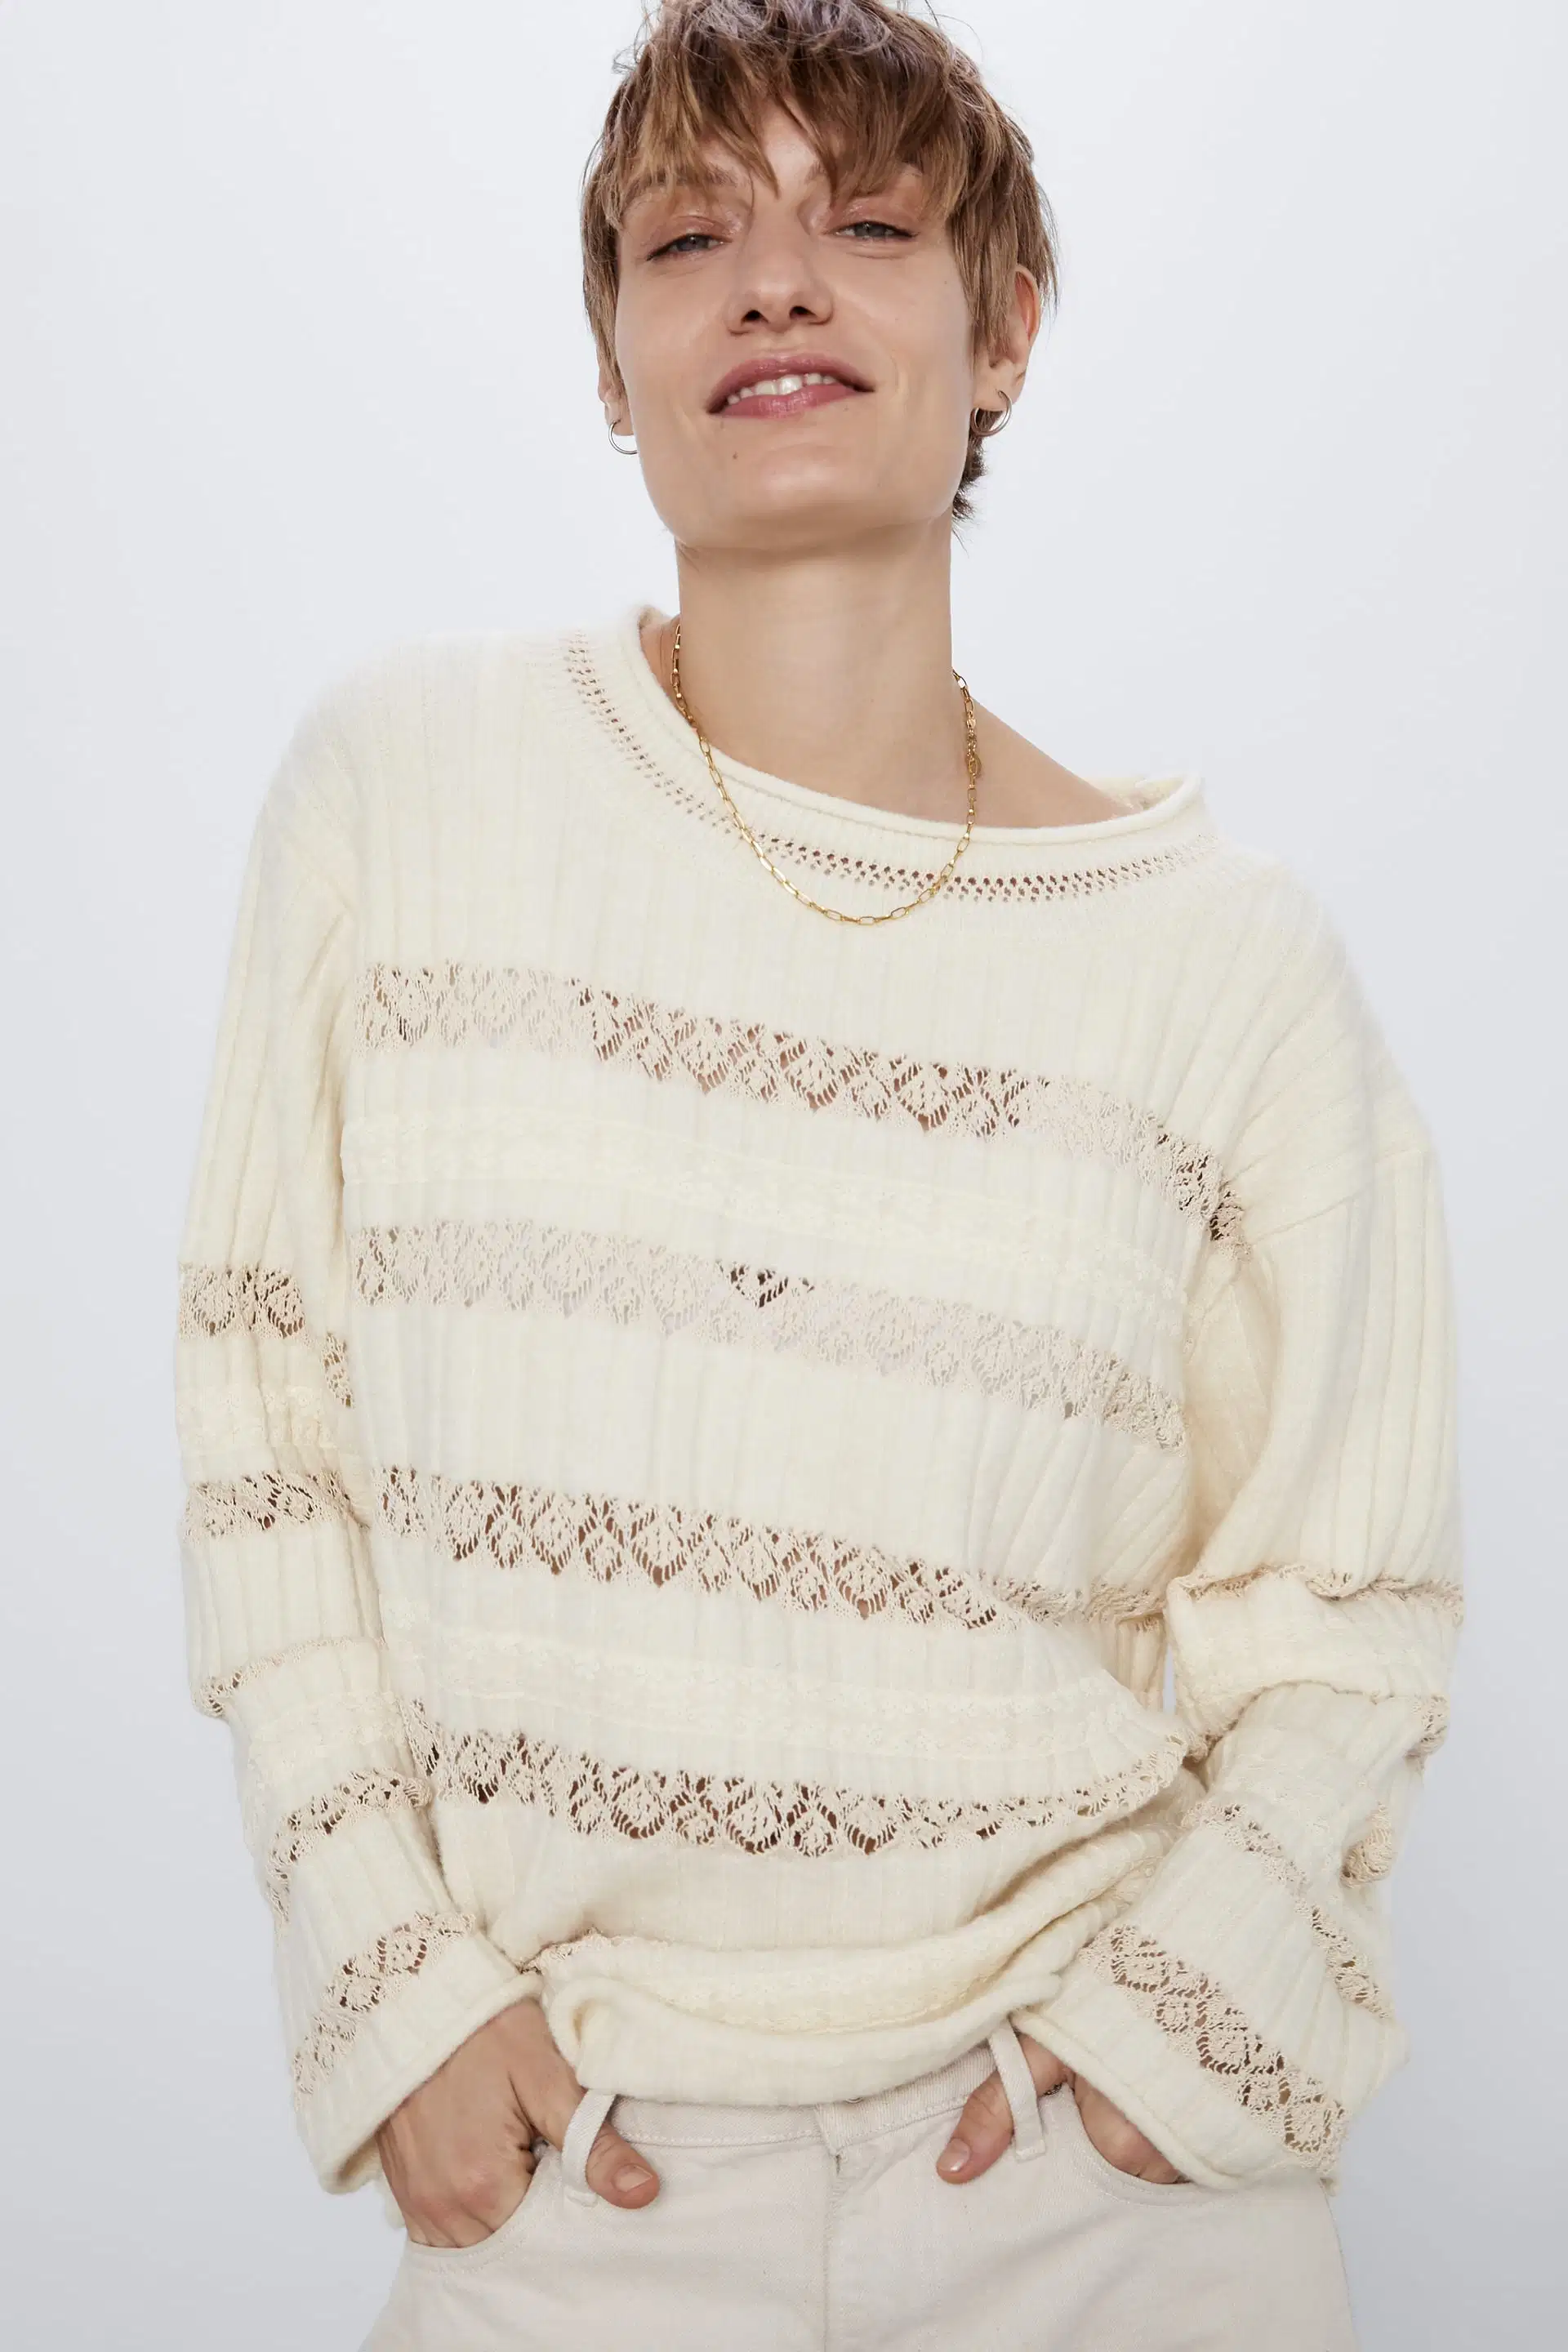 Moda Mujer suéter tejido con bolas